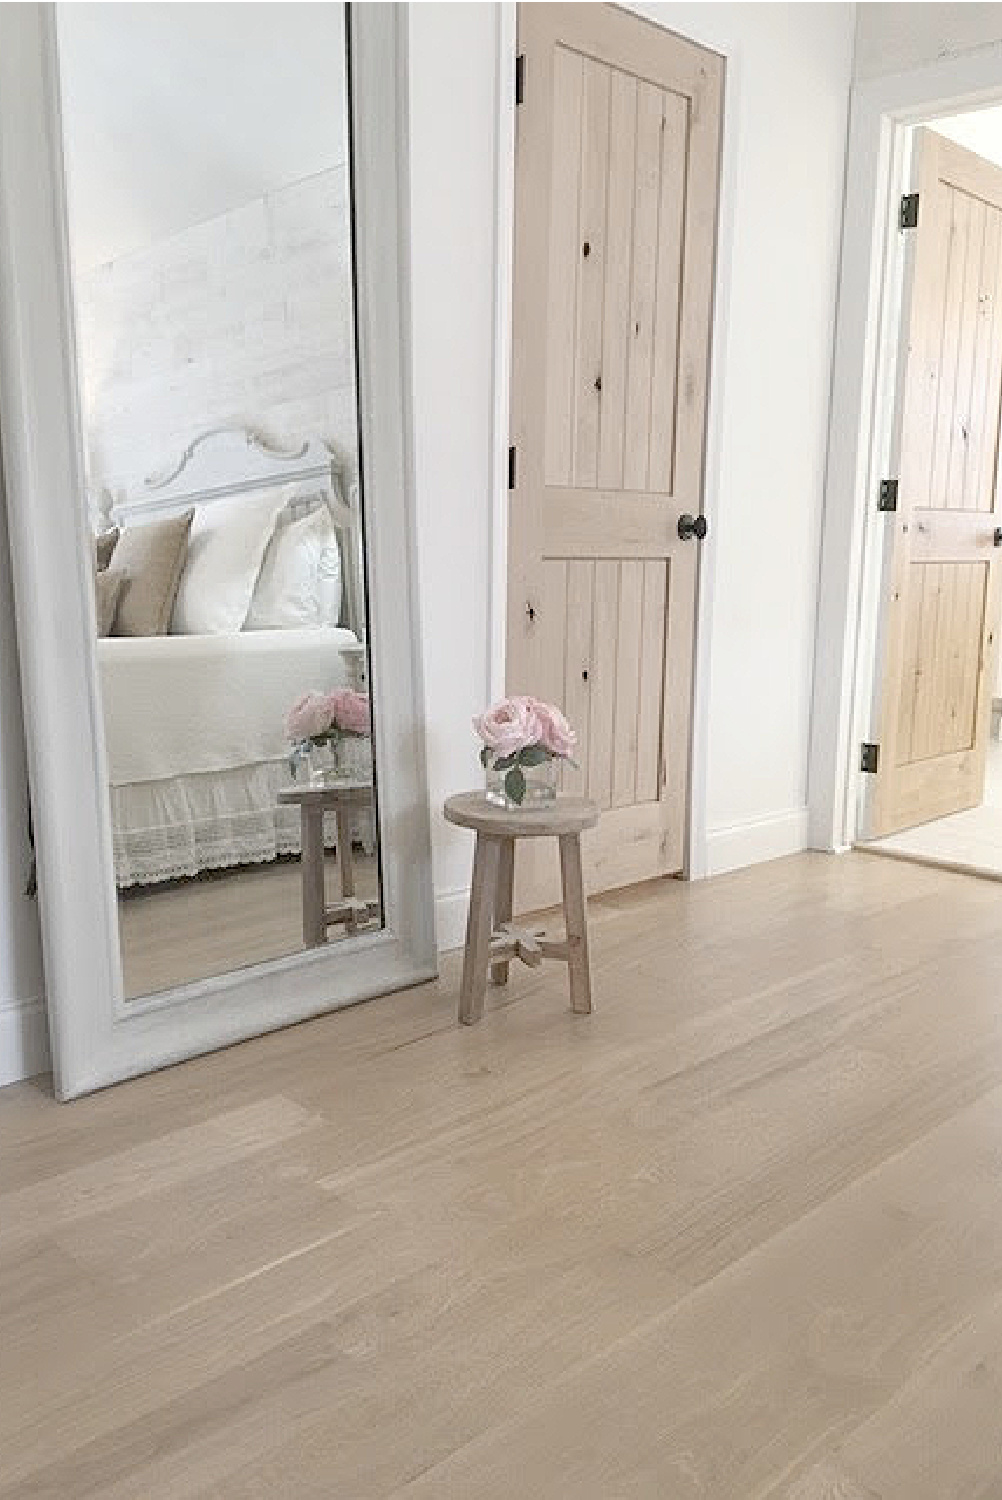 Knotty alder doors, white oak flooring, and neutral decor in a serene European country bedroom - Hello Lovely Studio. #europeancountry #knottyalder #serenebedroom